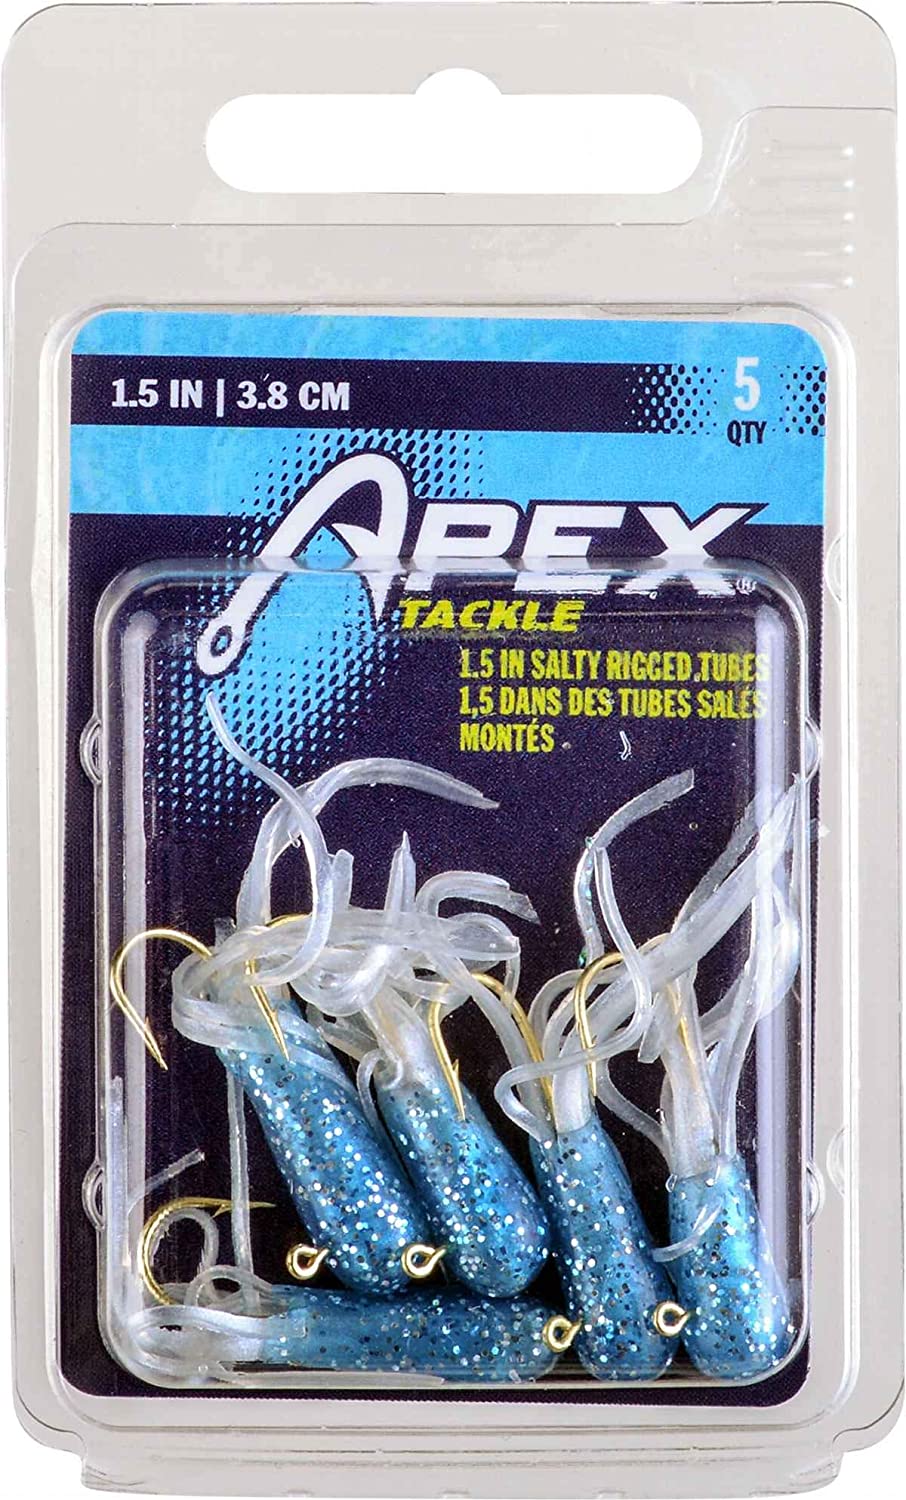 Apex Tackle SLT Mini-Tube Fishing Lures, 1.5-in, Blue Glitter, 15